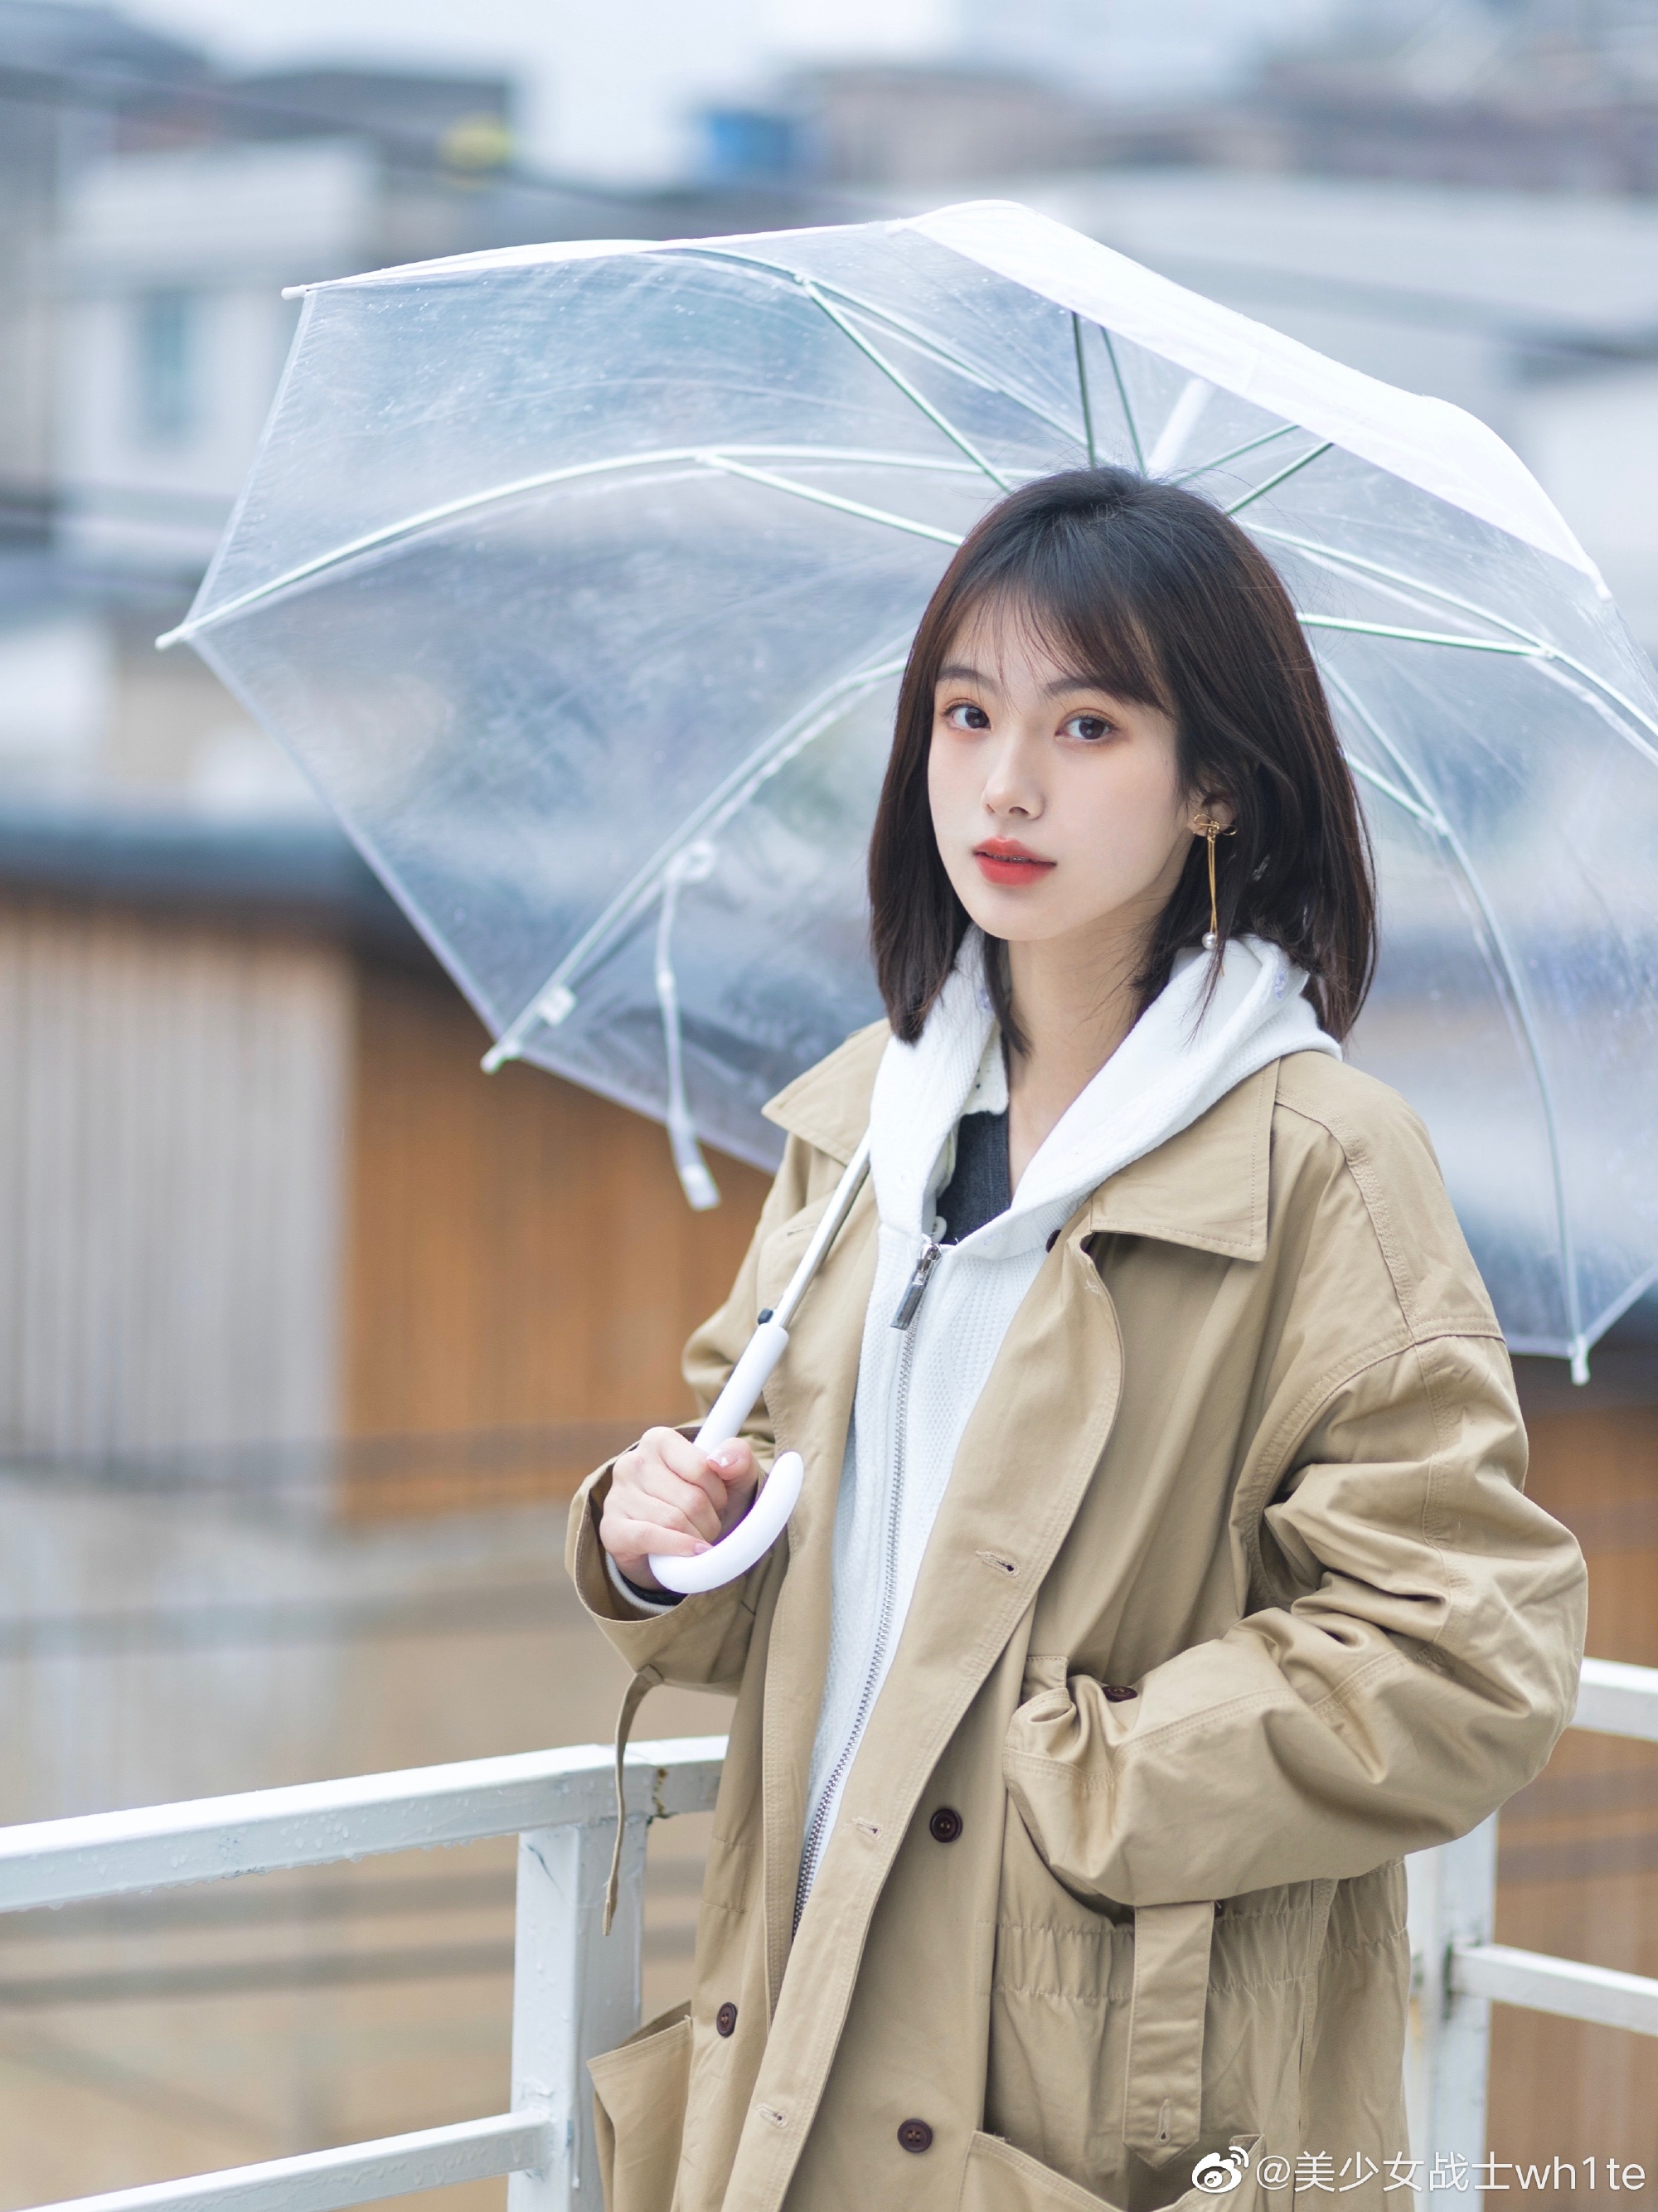 Asian Face Women Model Coats Watermarked Brunette Umbrella Women With Umbrella Women Outdoors Urban  2000x2668